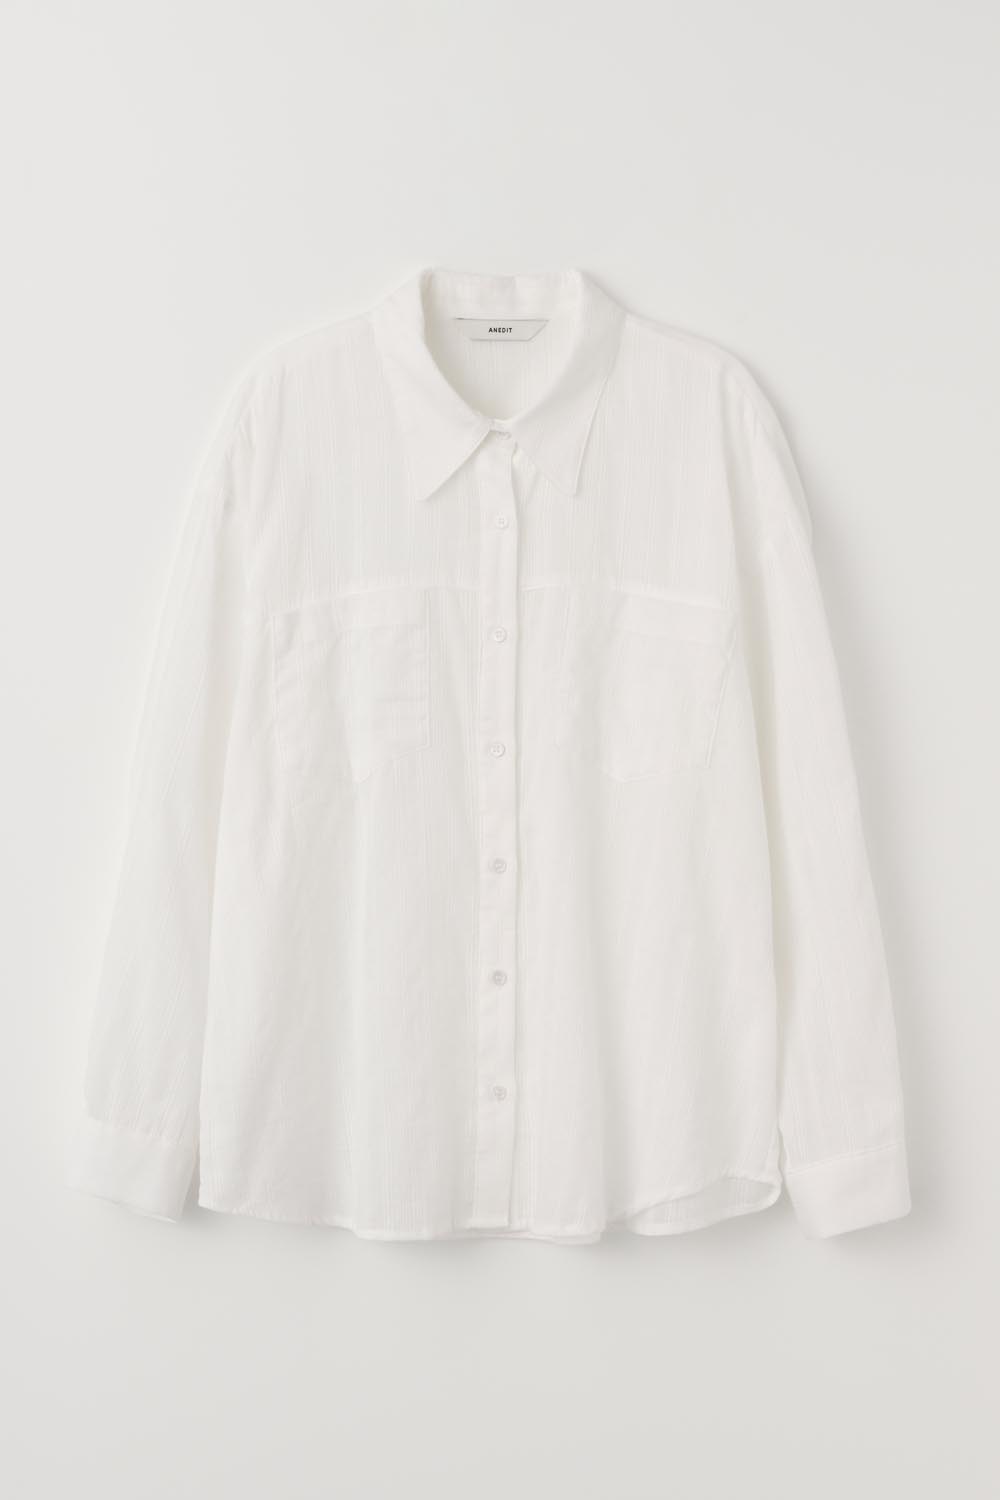 H See through Pocket Shirt_White Stripe